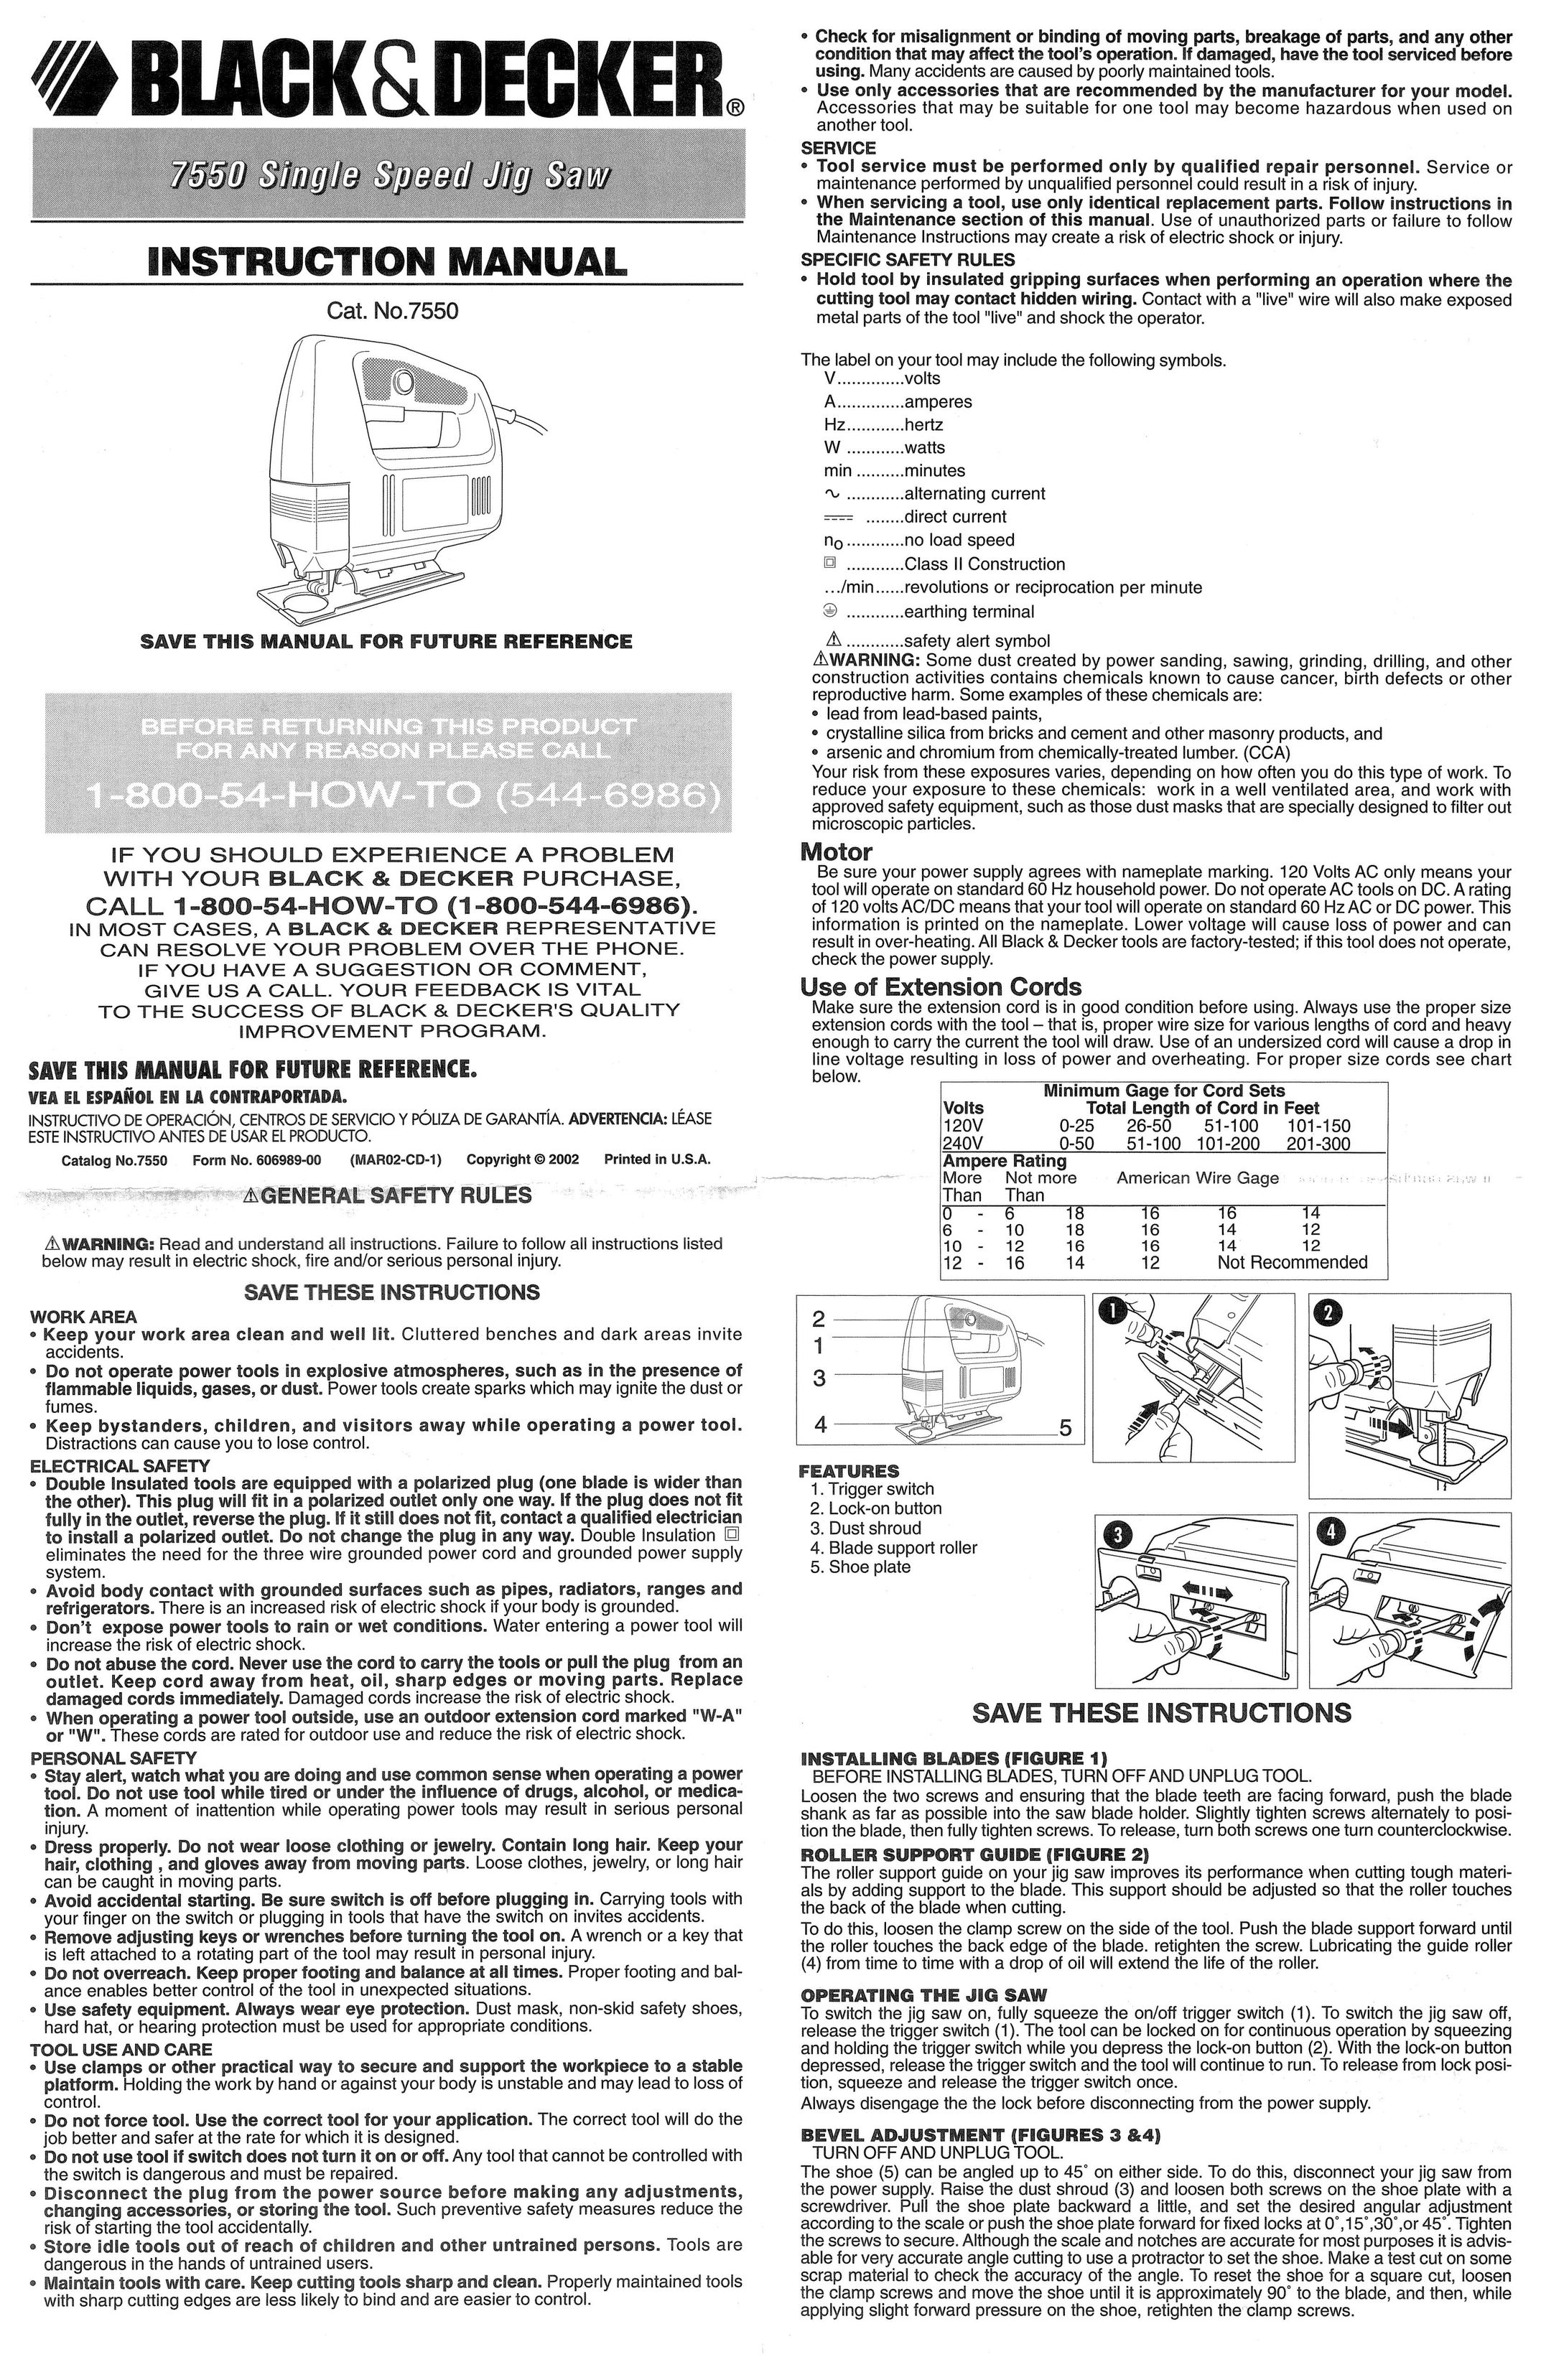 Black & Decker 606989-00 Saw User Manual